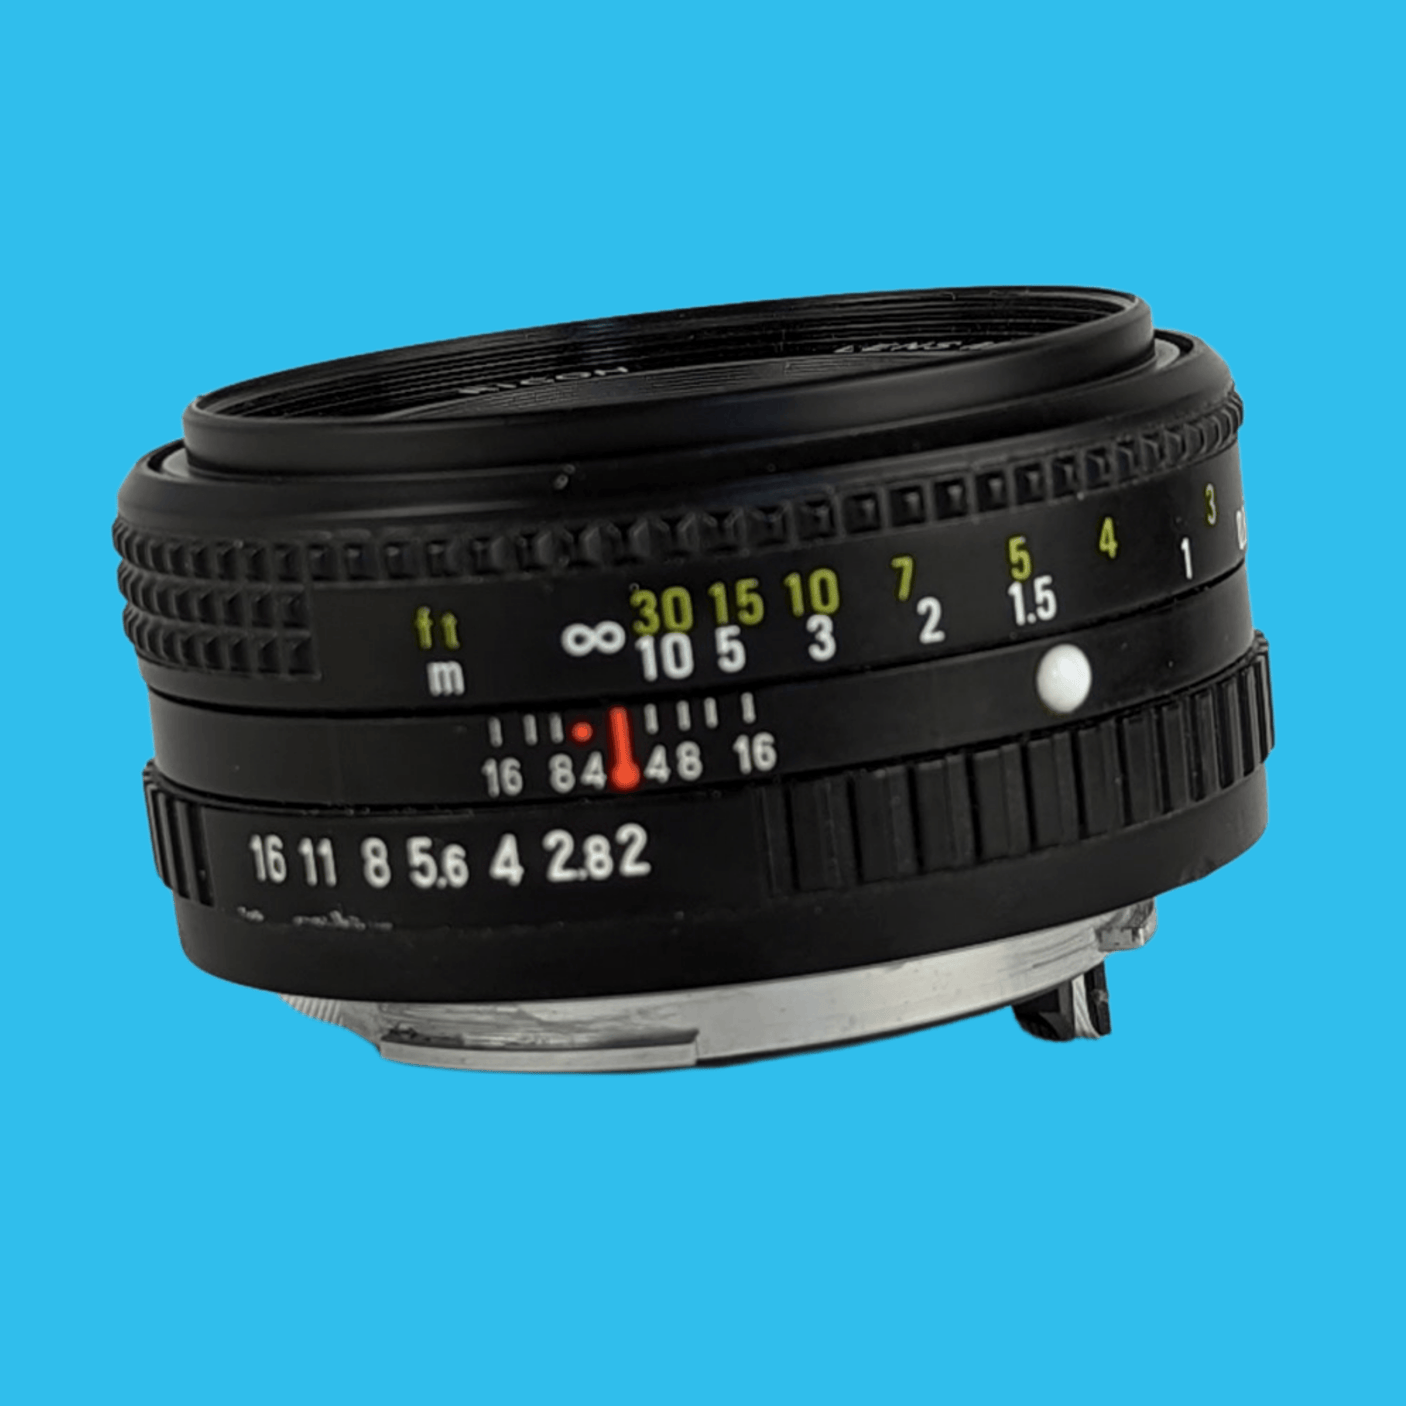 Ricoh 50mm f/1.2 Camera Lens